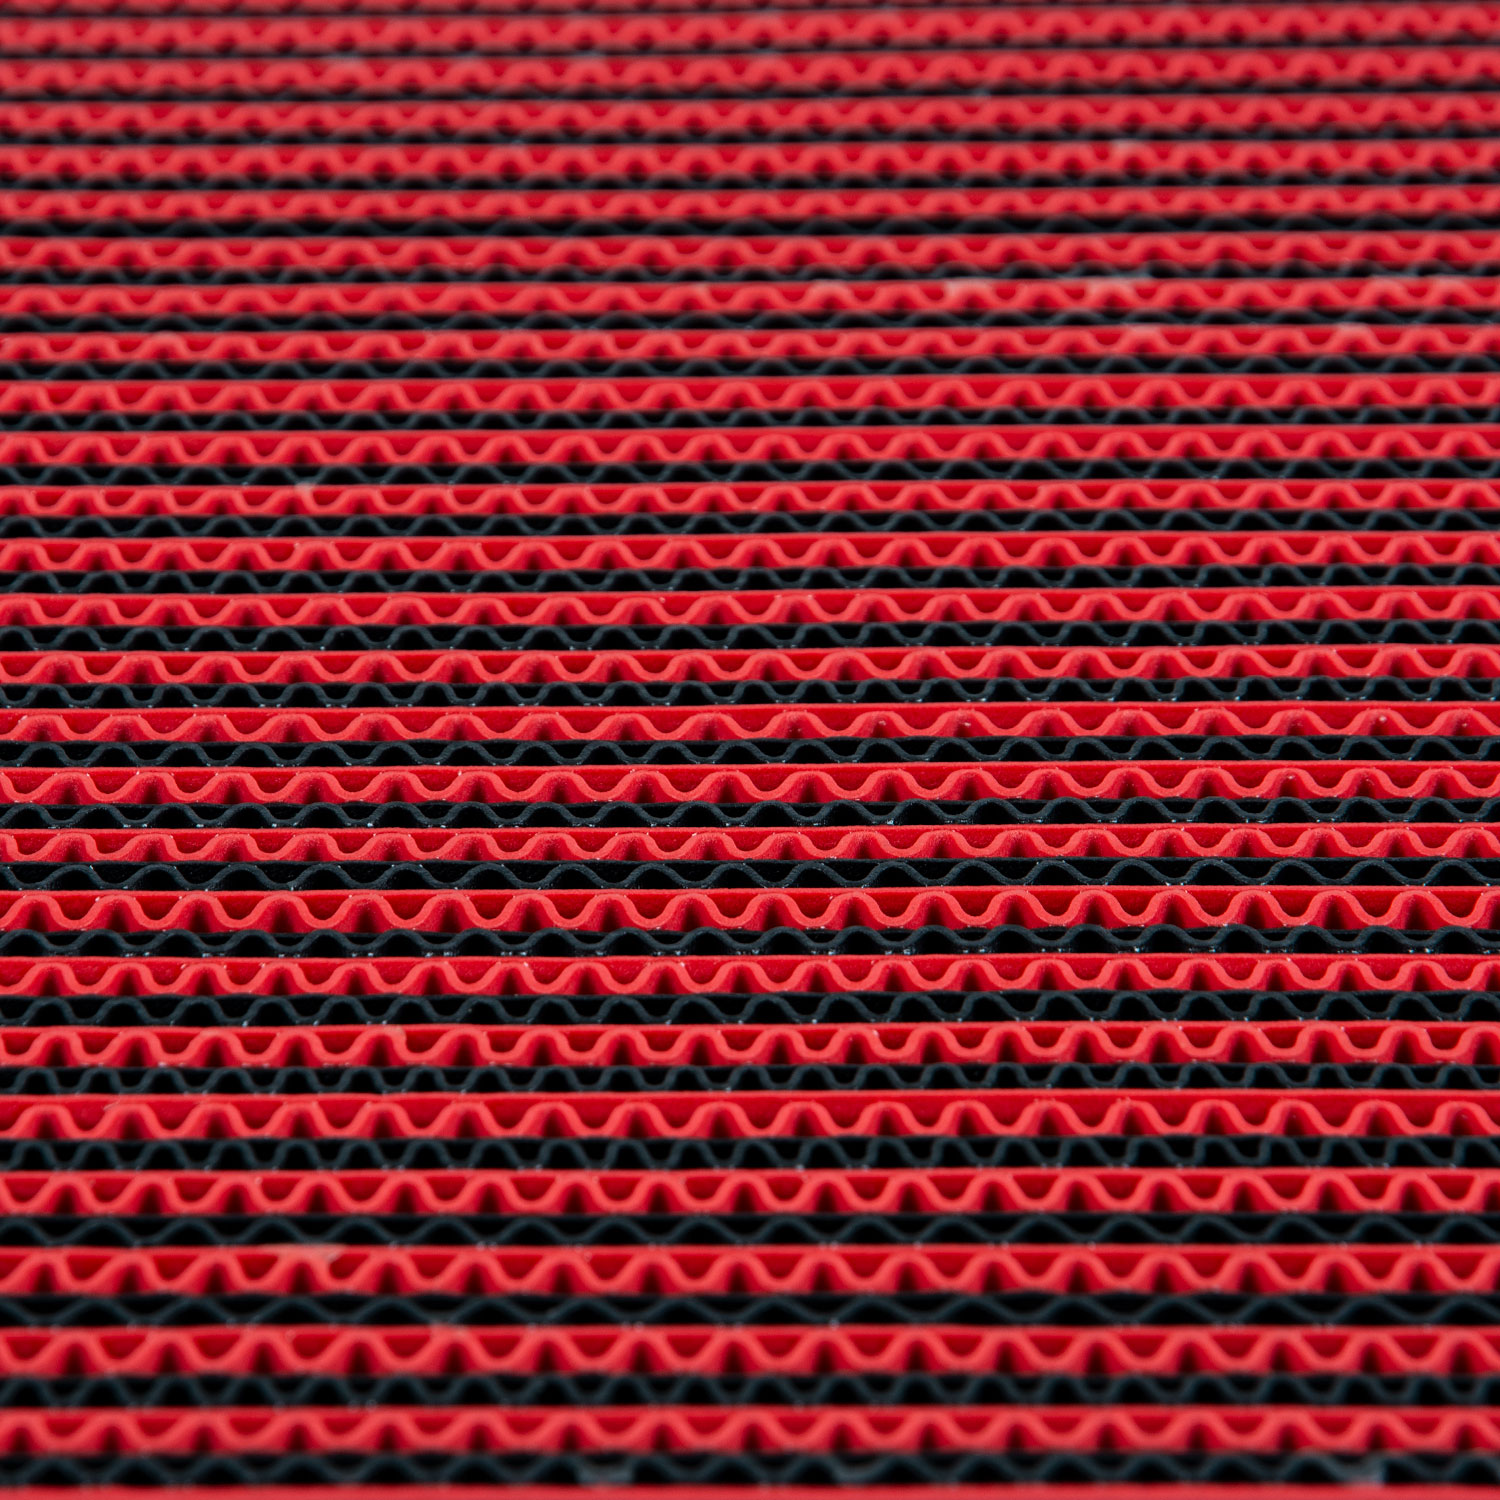 PVC Antirutschmatte schwarz/rot klein 750x120cm - Technikplaza